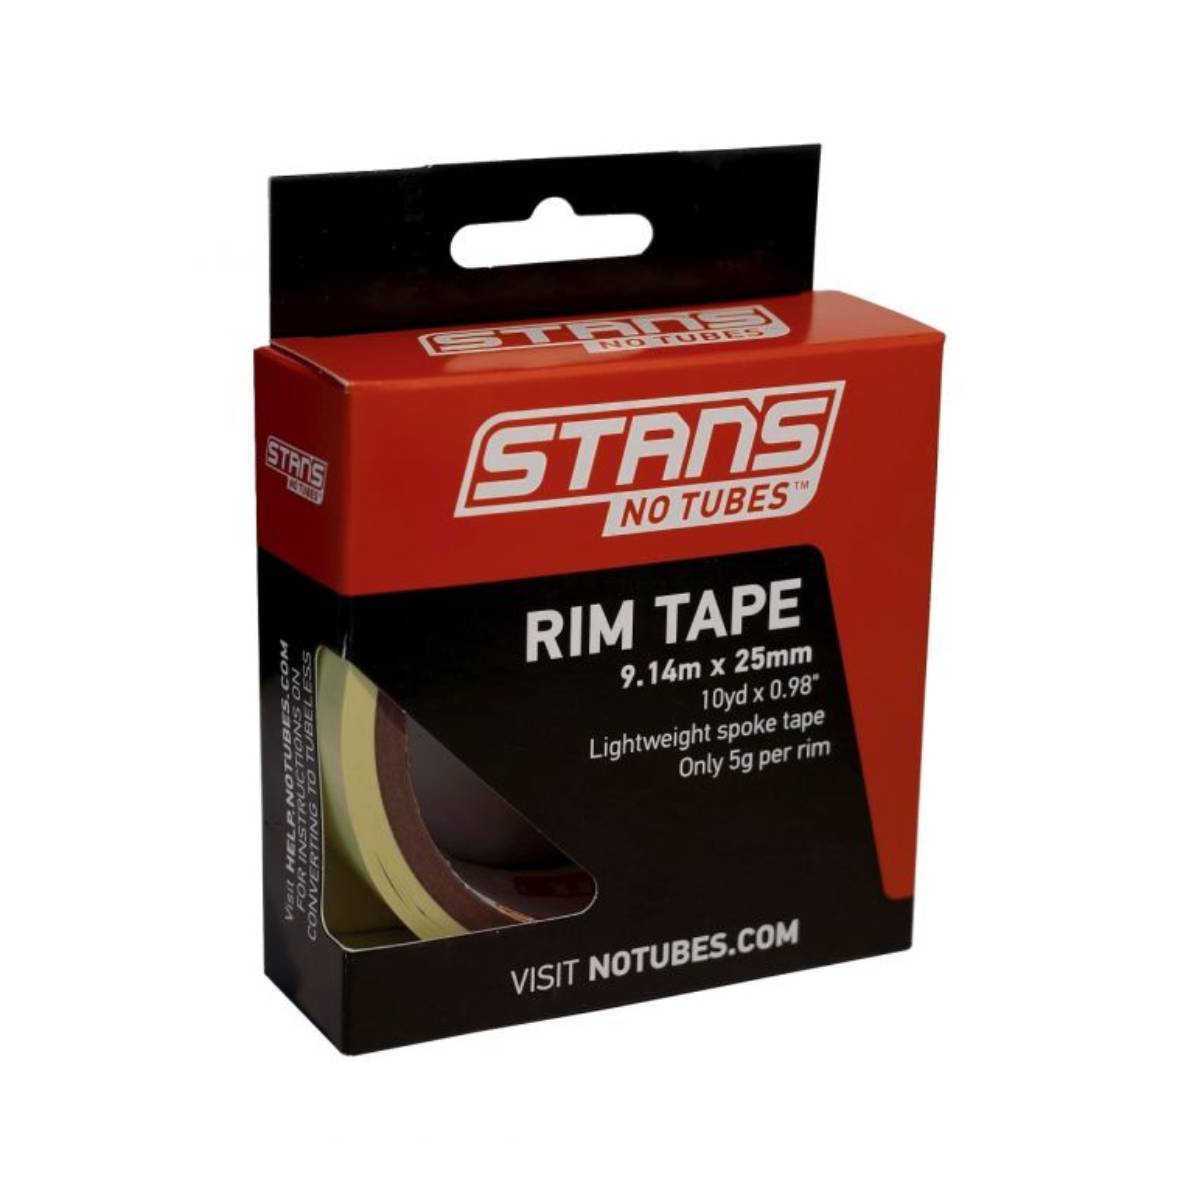 Stans No Tubes Tubeless Rim Tape 9.14m x 30mm